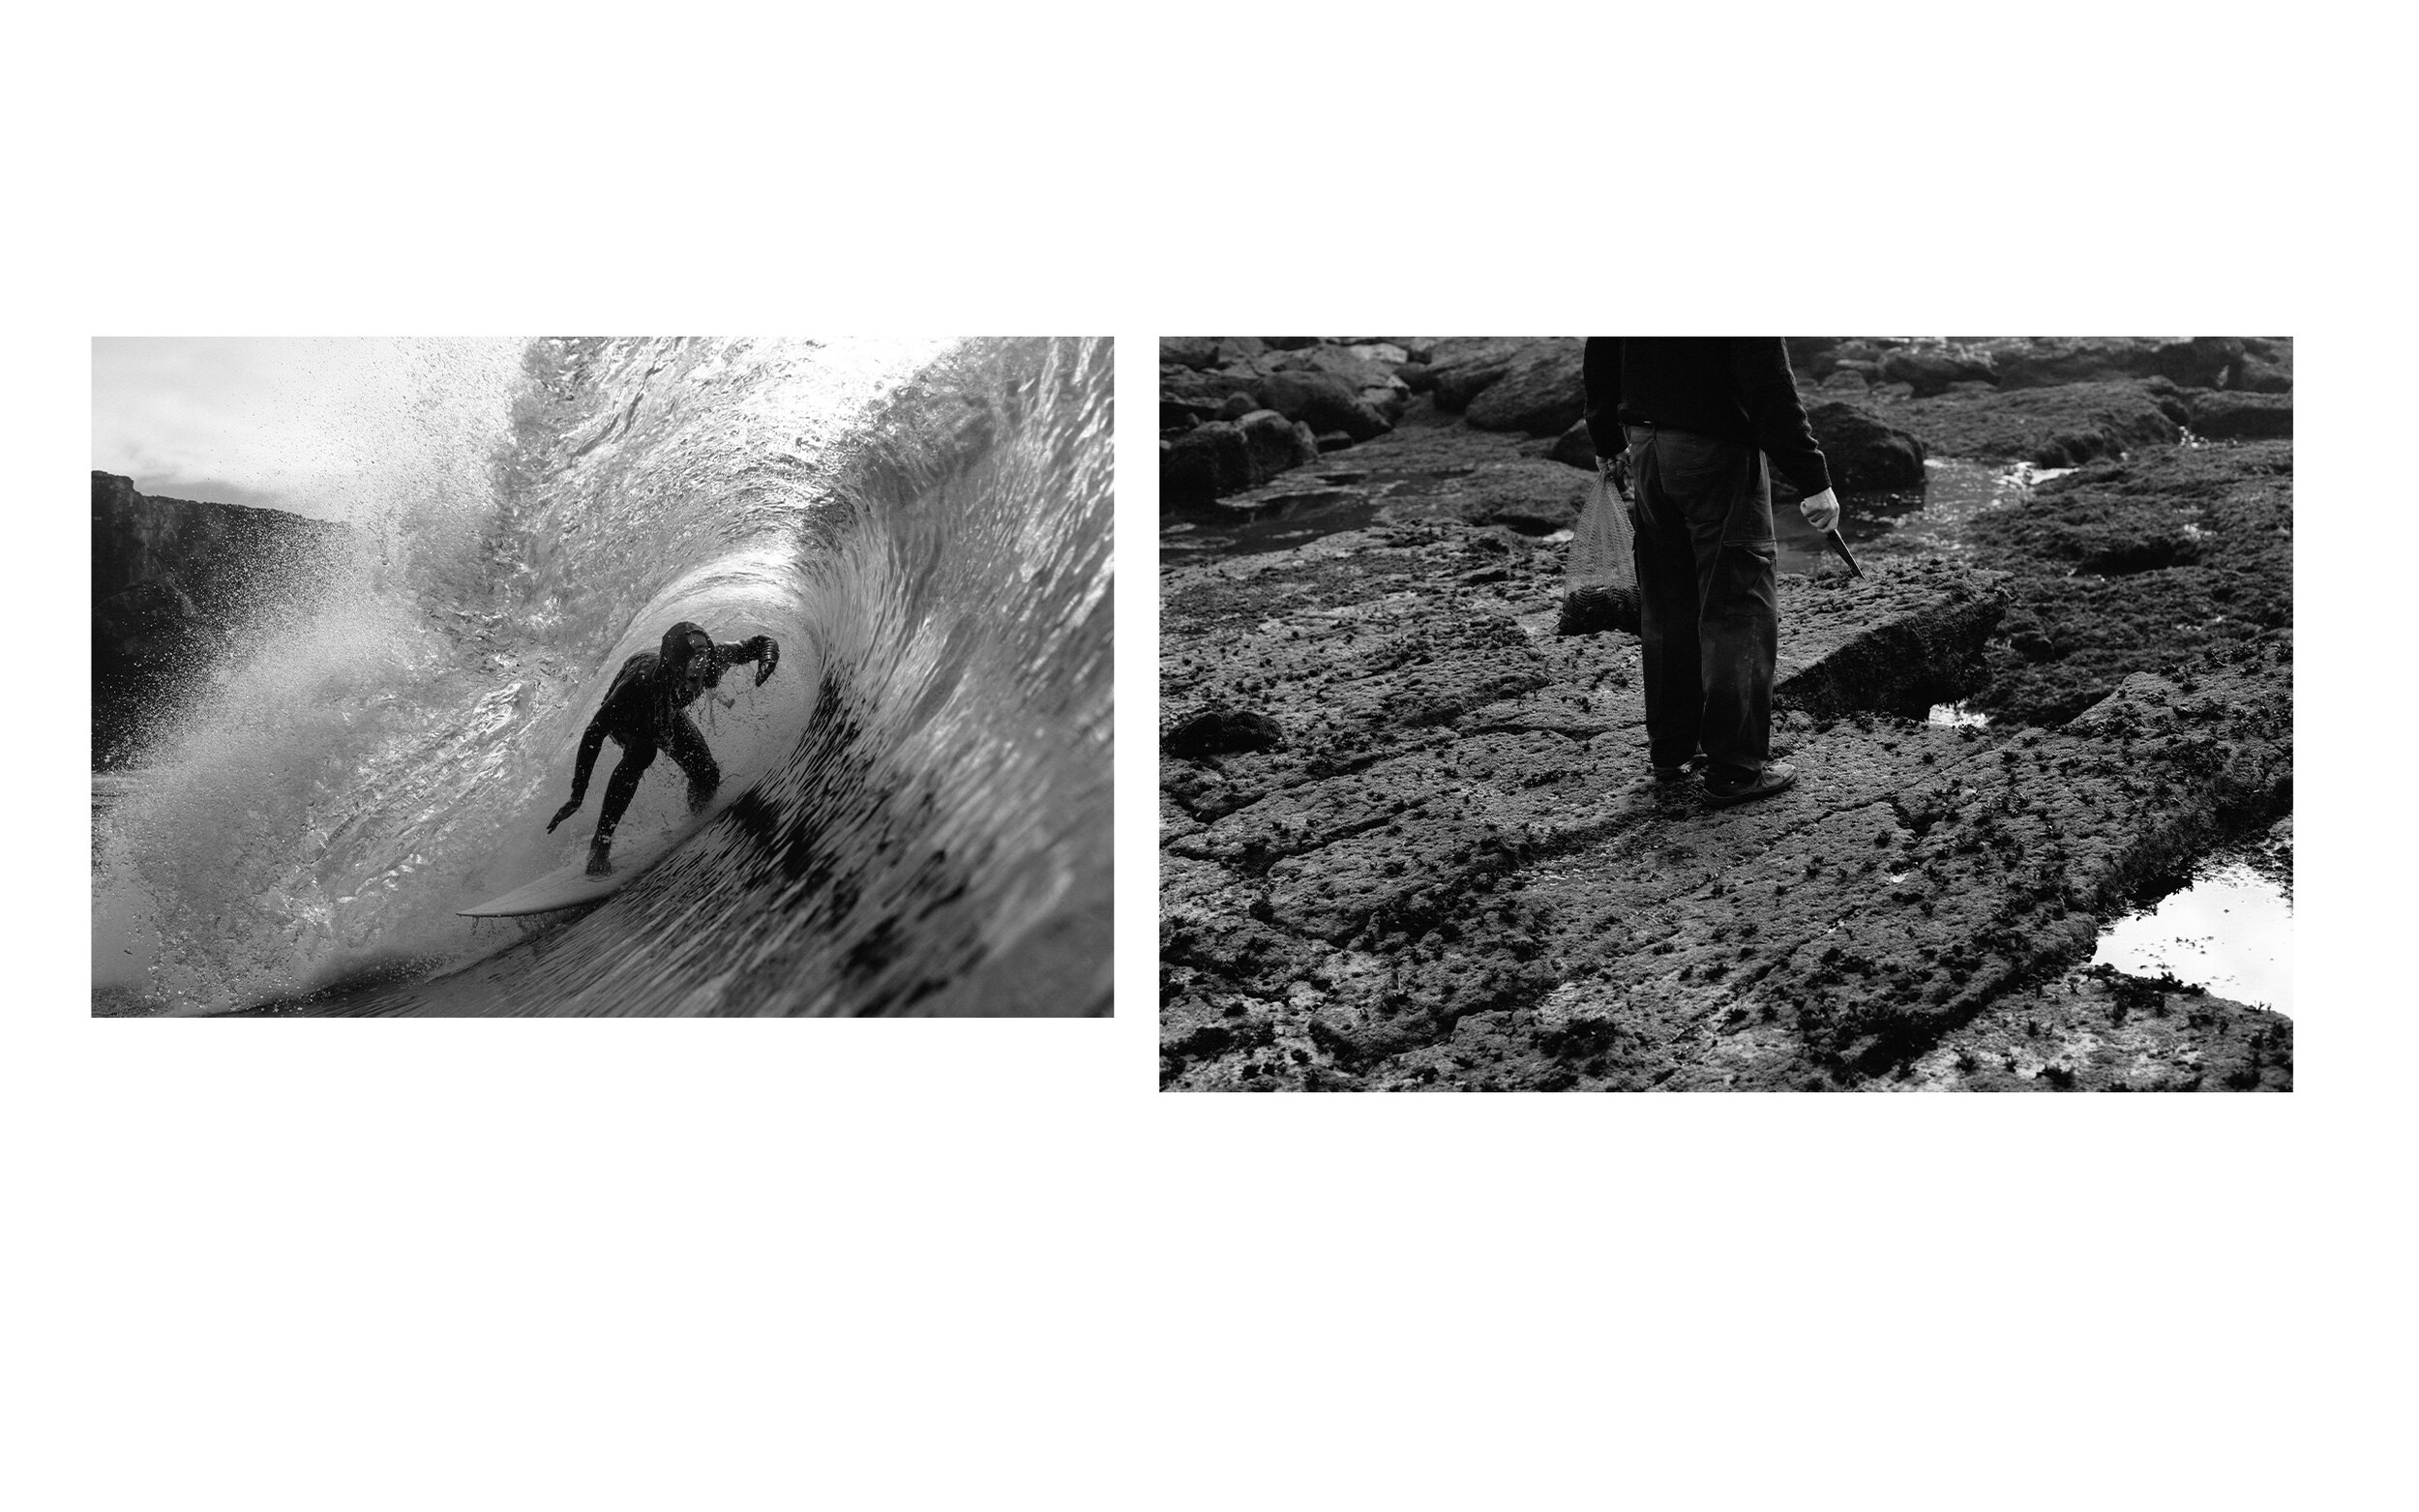 toby-butler-photographer-photography-portugal-surfing-surf-landscape-travelphotographer-inkglobal-portrait-tourism-ocean-algarve-photo-surfer-love-earth-climate-planet-beautiful-wild-people- portrait-documentary-6.jpg